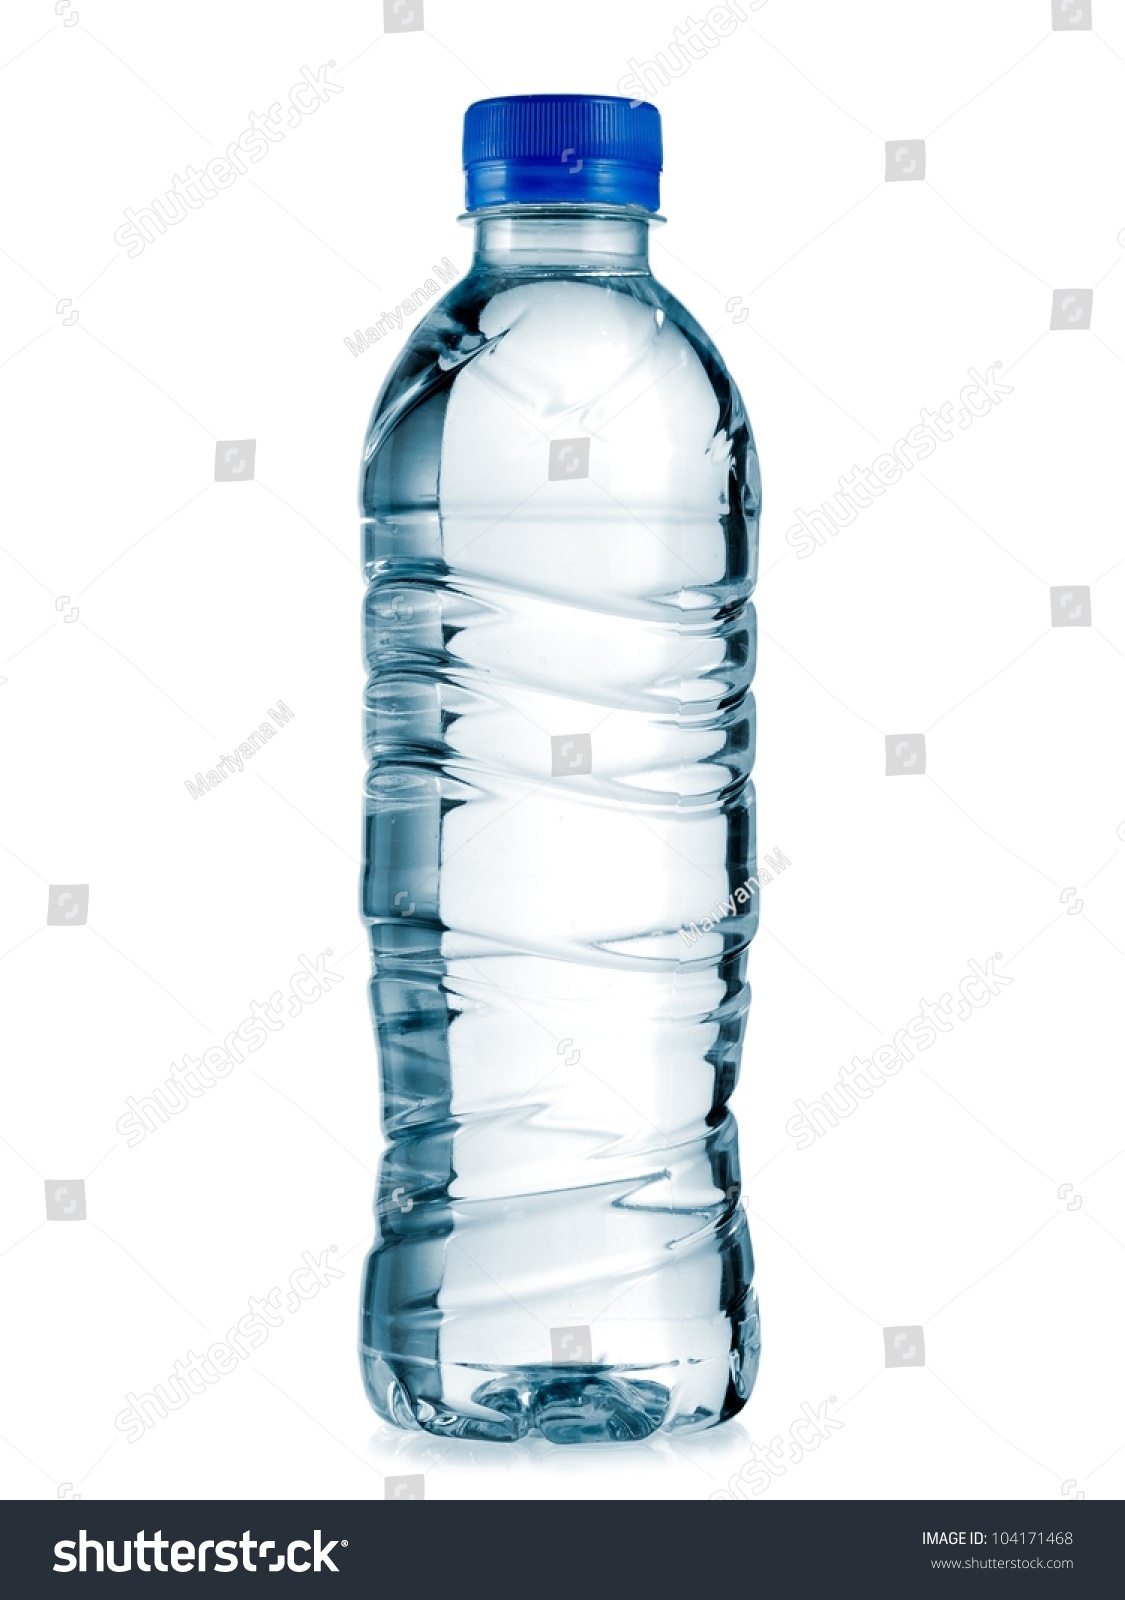 Small water bottle #104171468